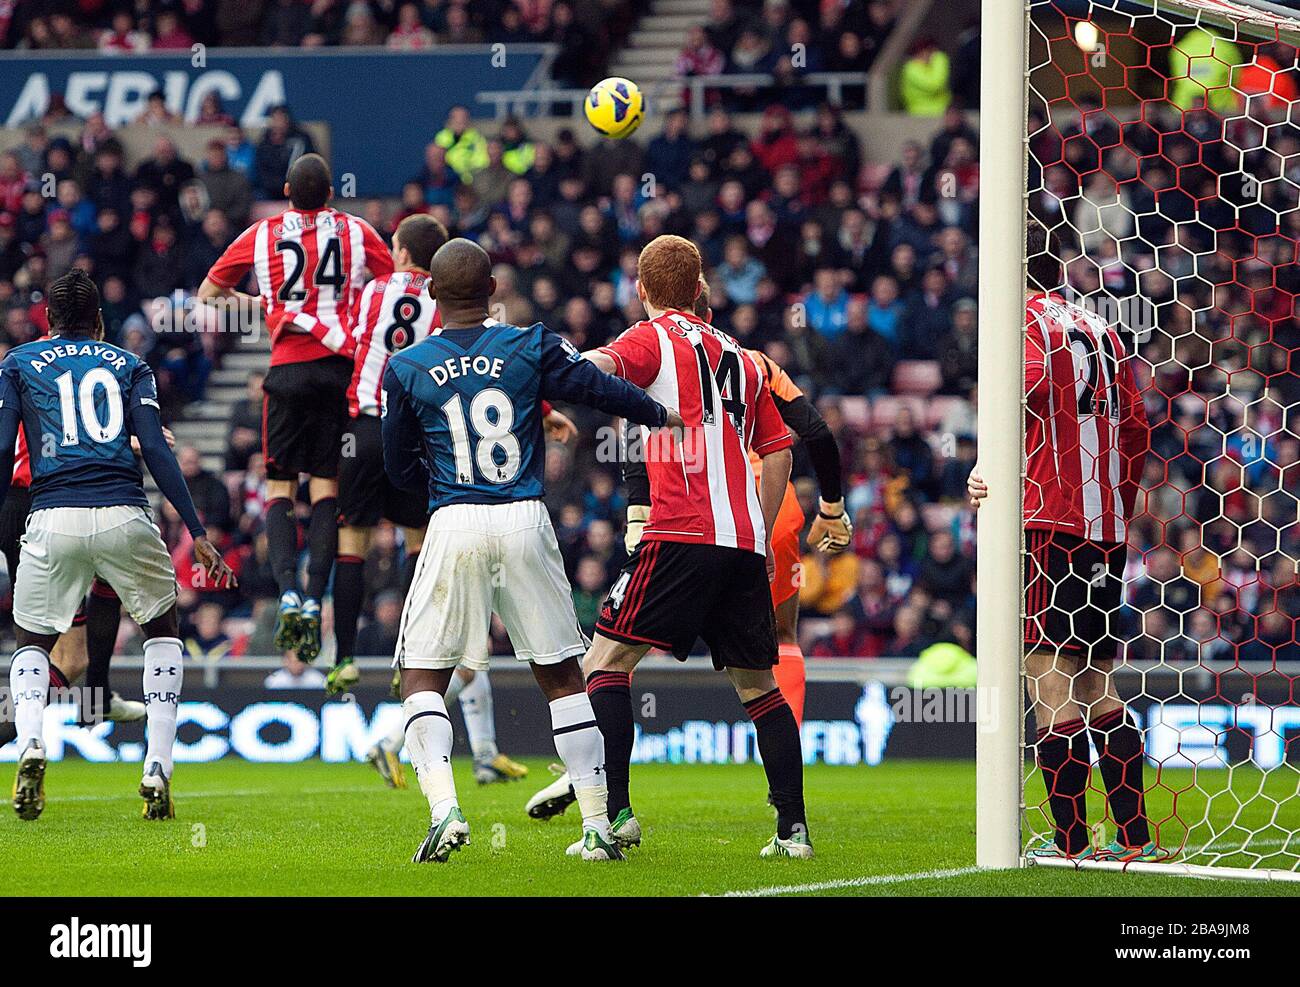 Sunderland's Carlos Cuellar scores an own goal Stock Photo